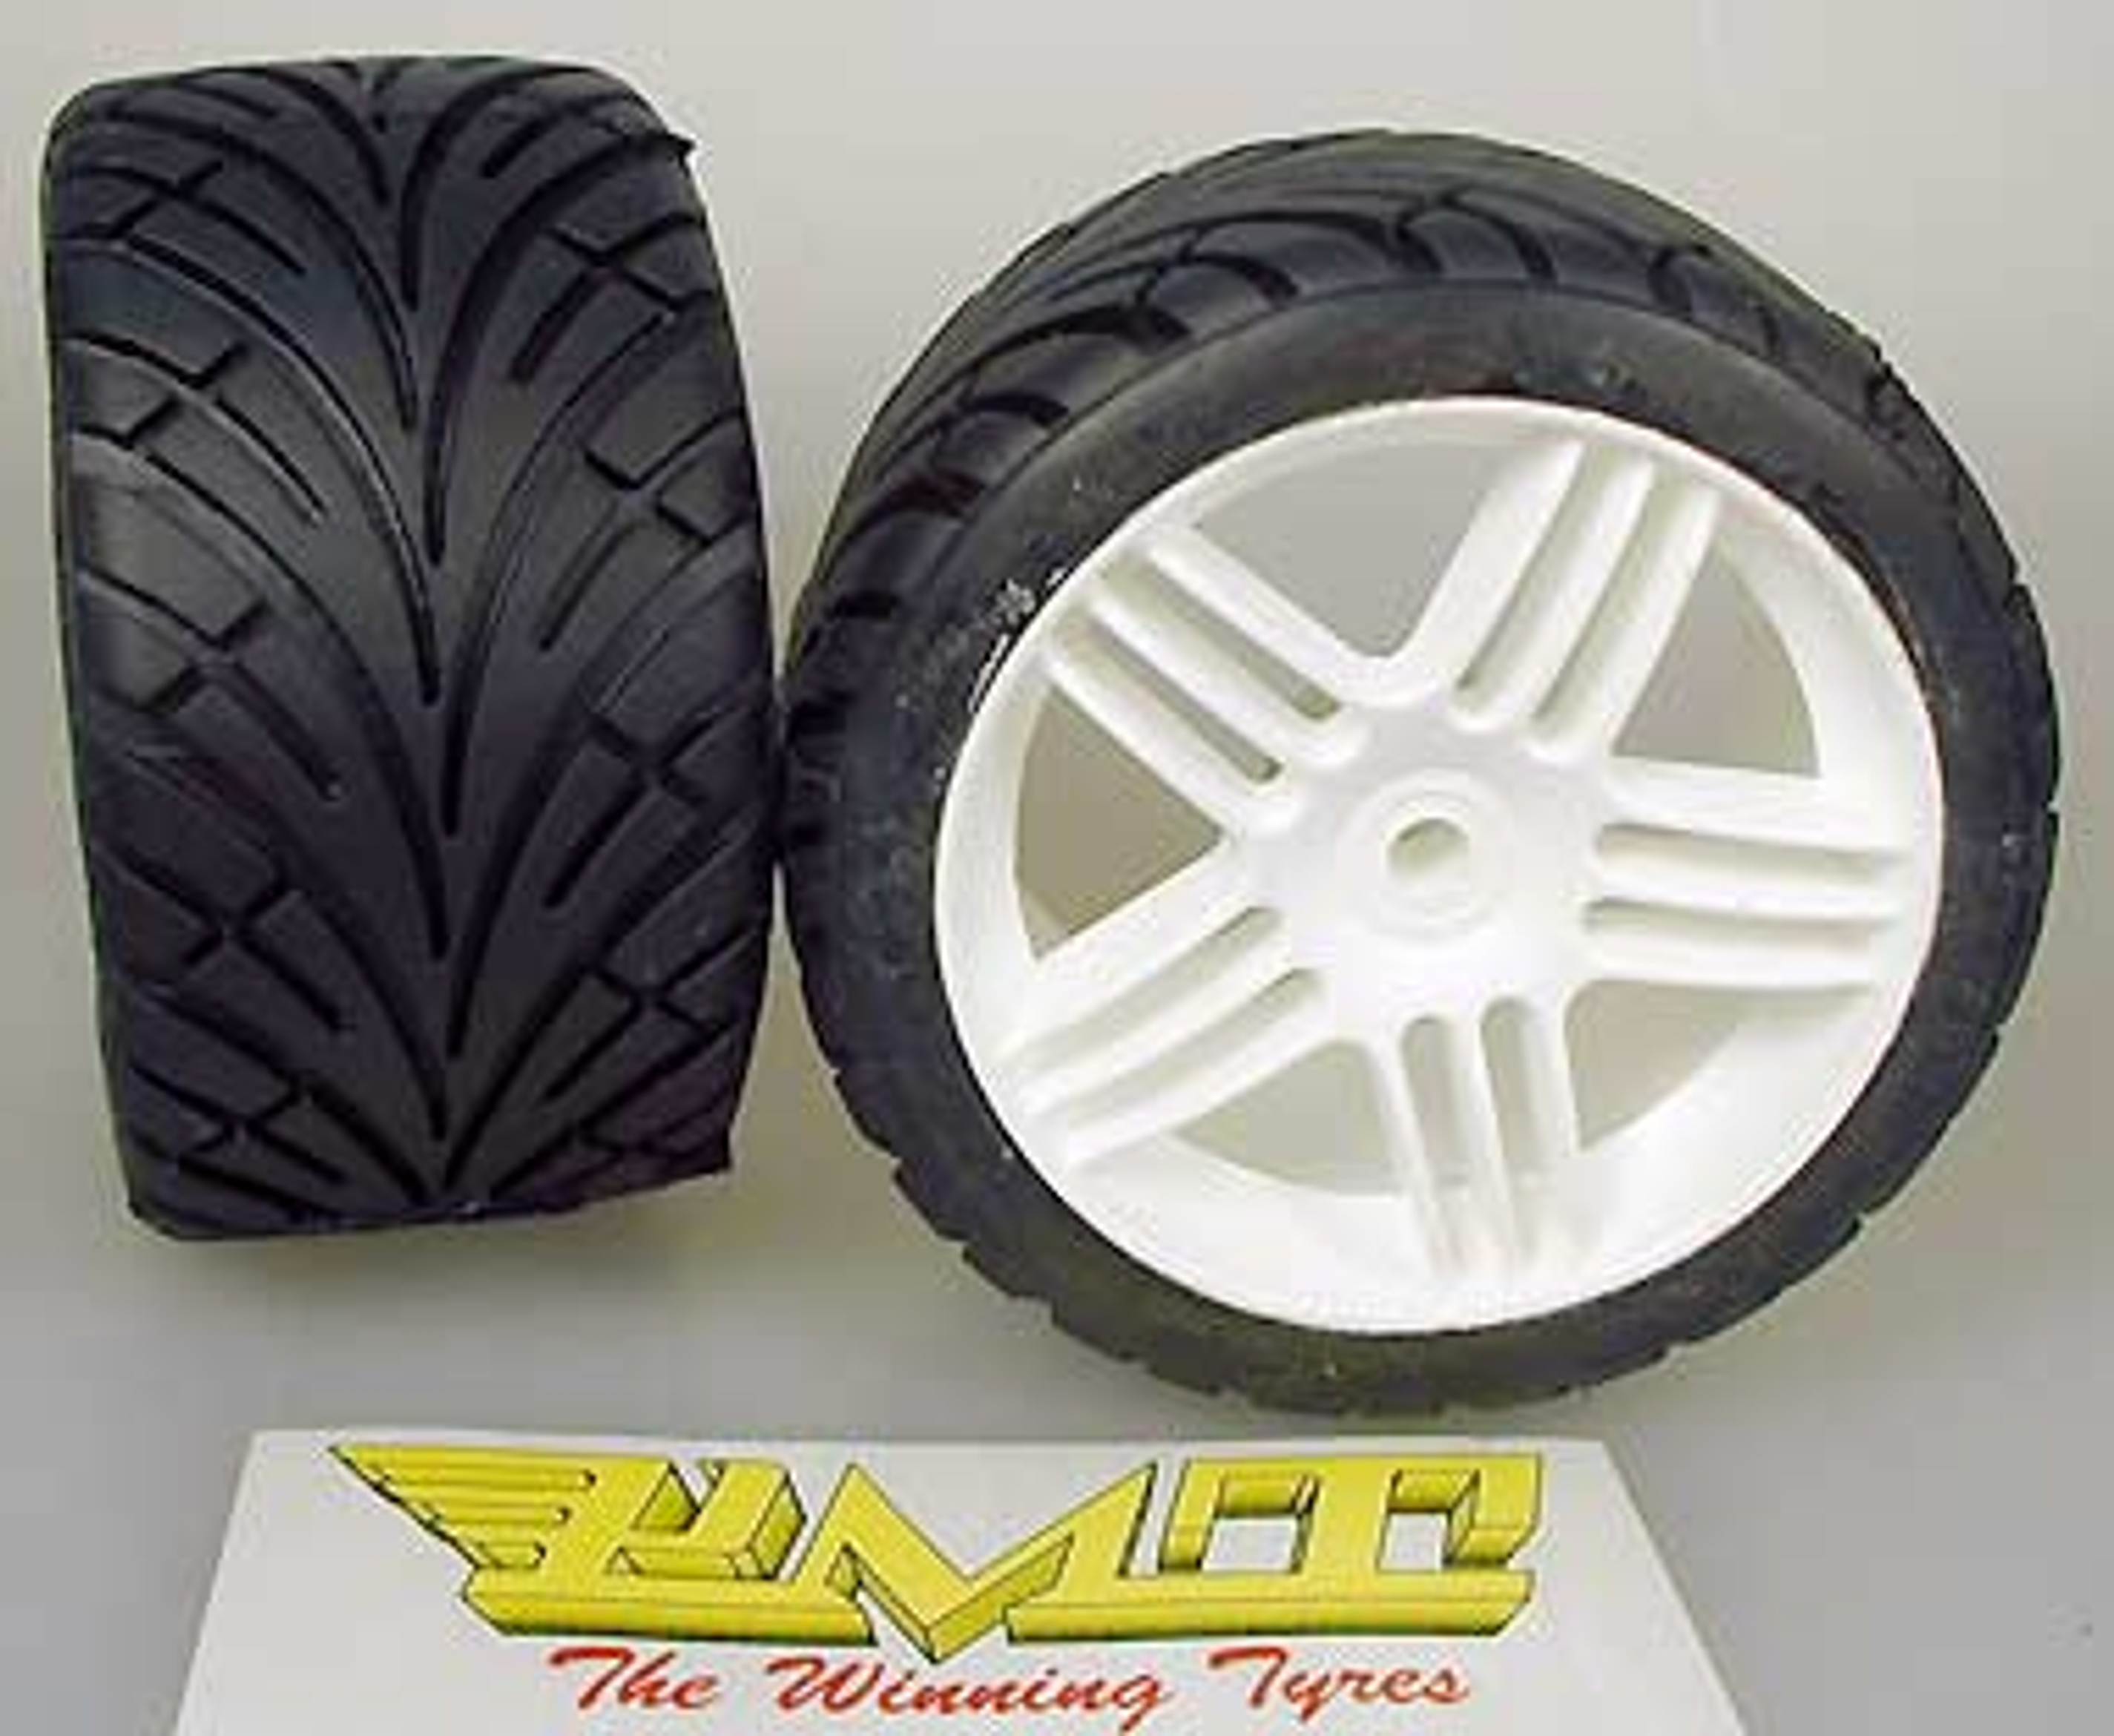 8564/05 FG Profile rain tires PMT Eagle 300 glued - 2pcs.